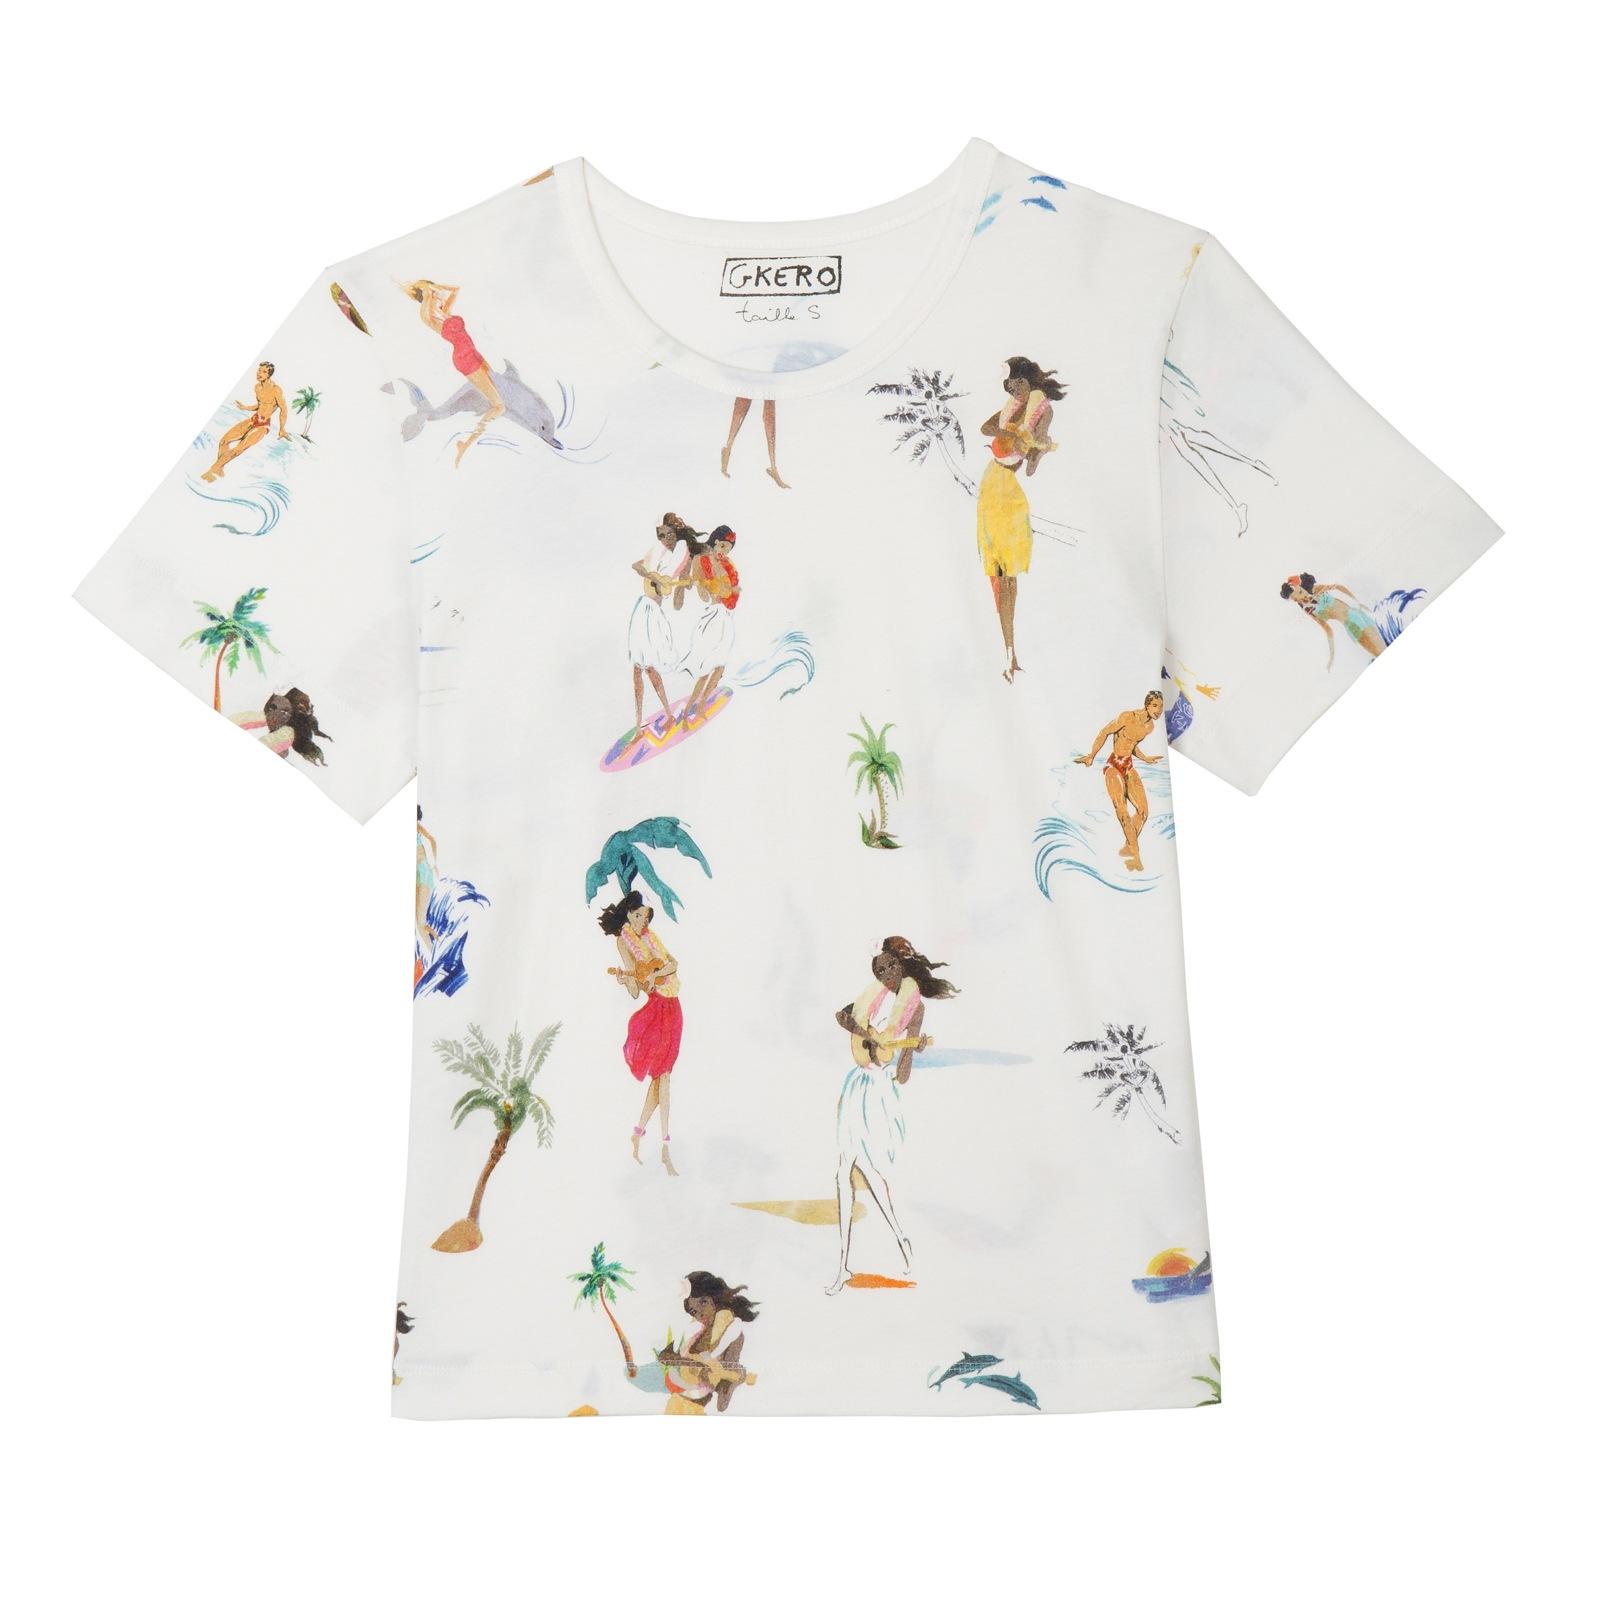 Gkero little hawaiian dancers print cotton t-shirt for woman